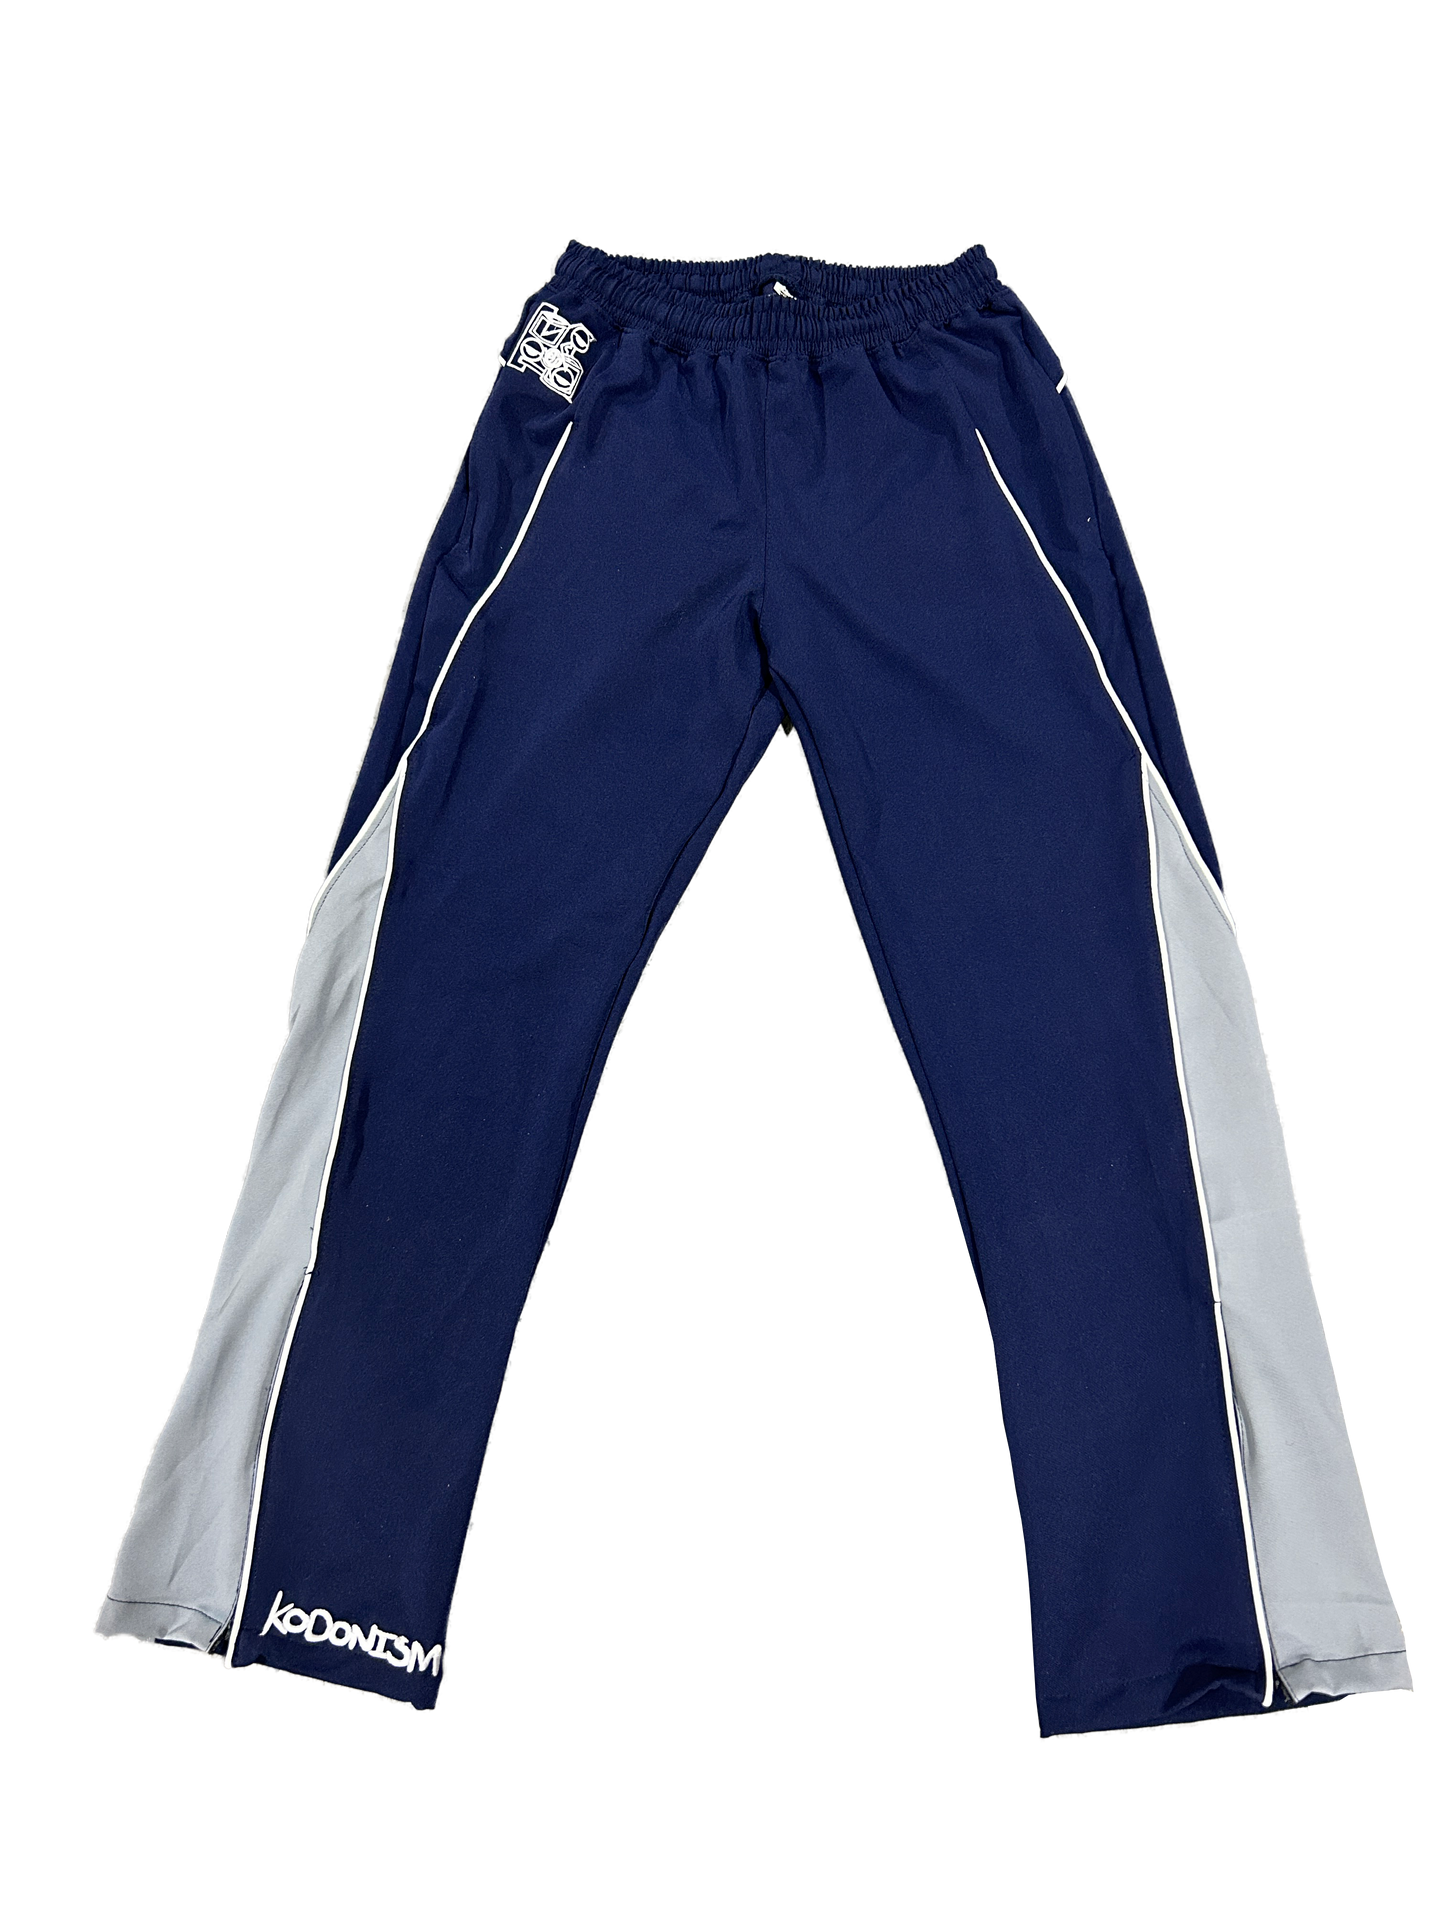 K Track Pants (Navy)